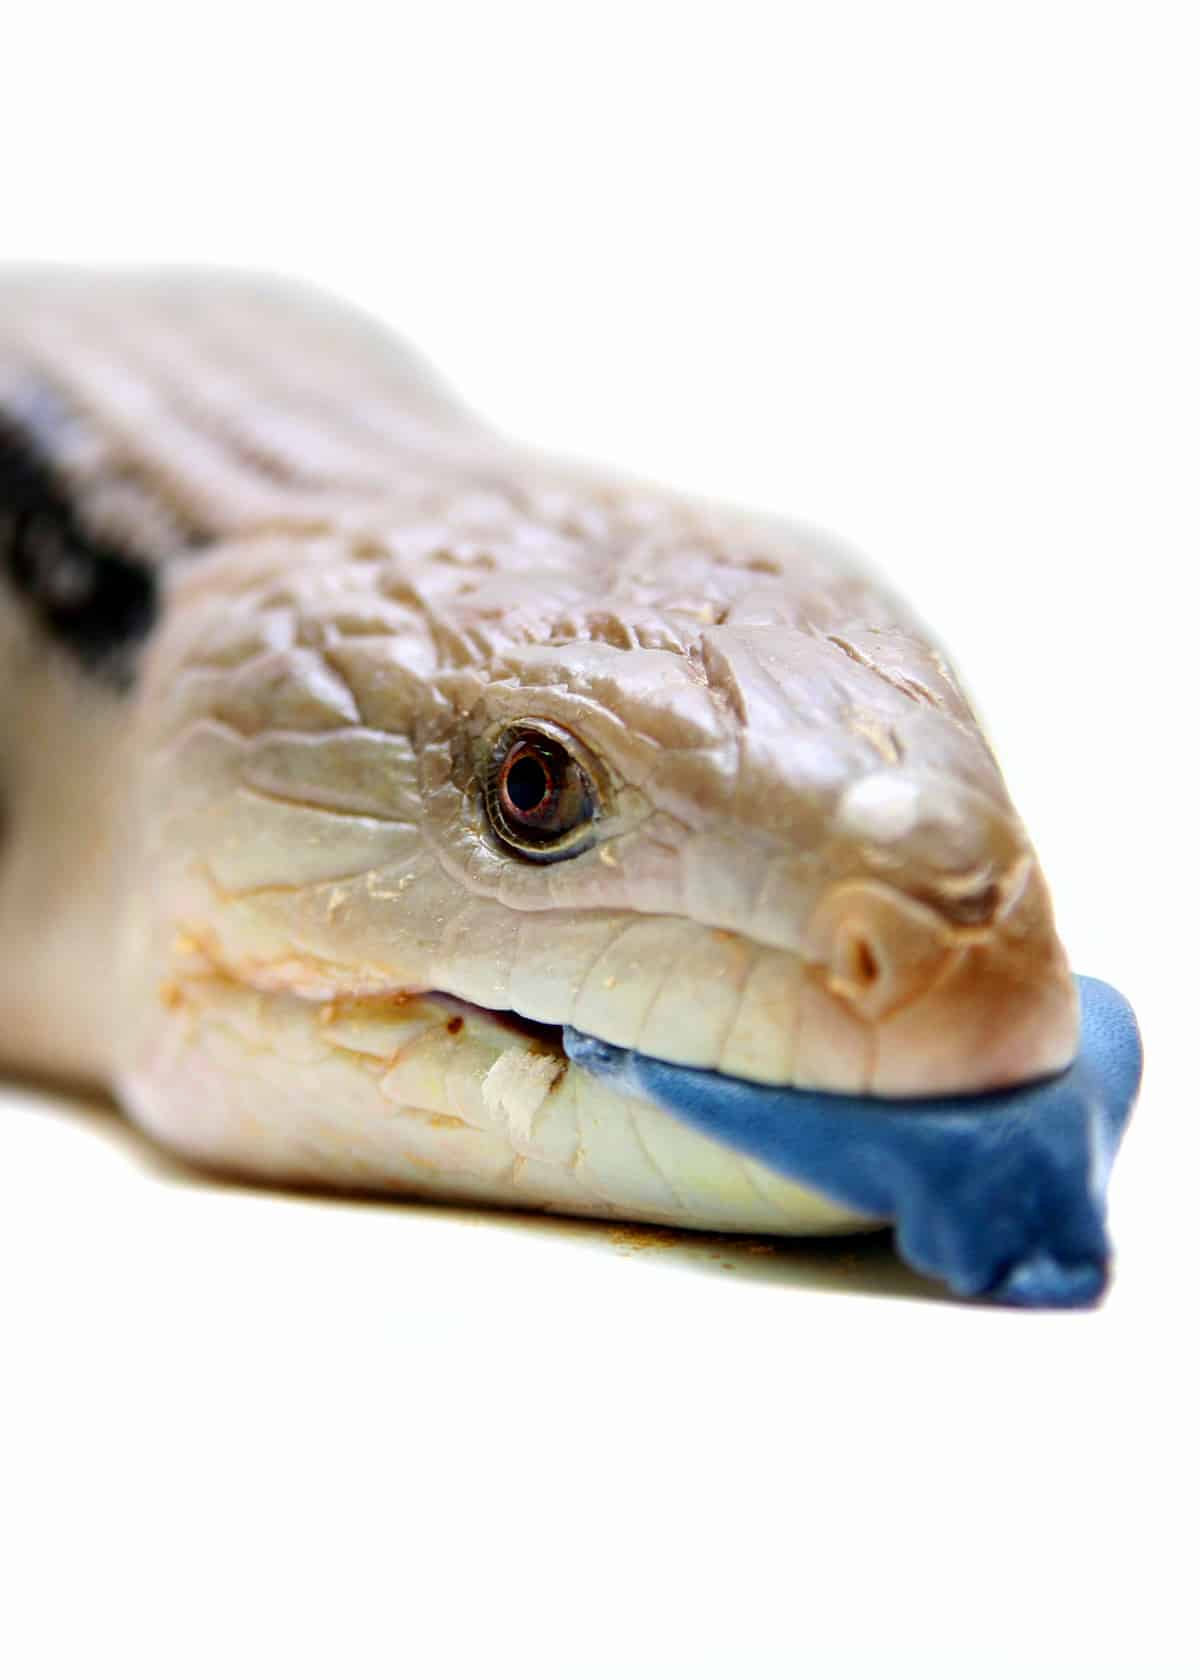 Blue tongue skink